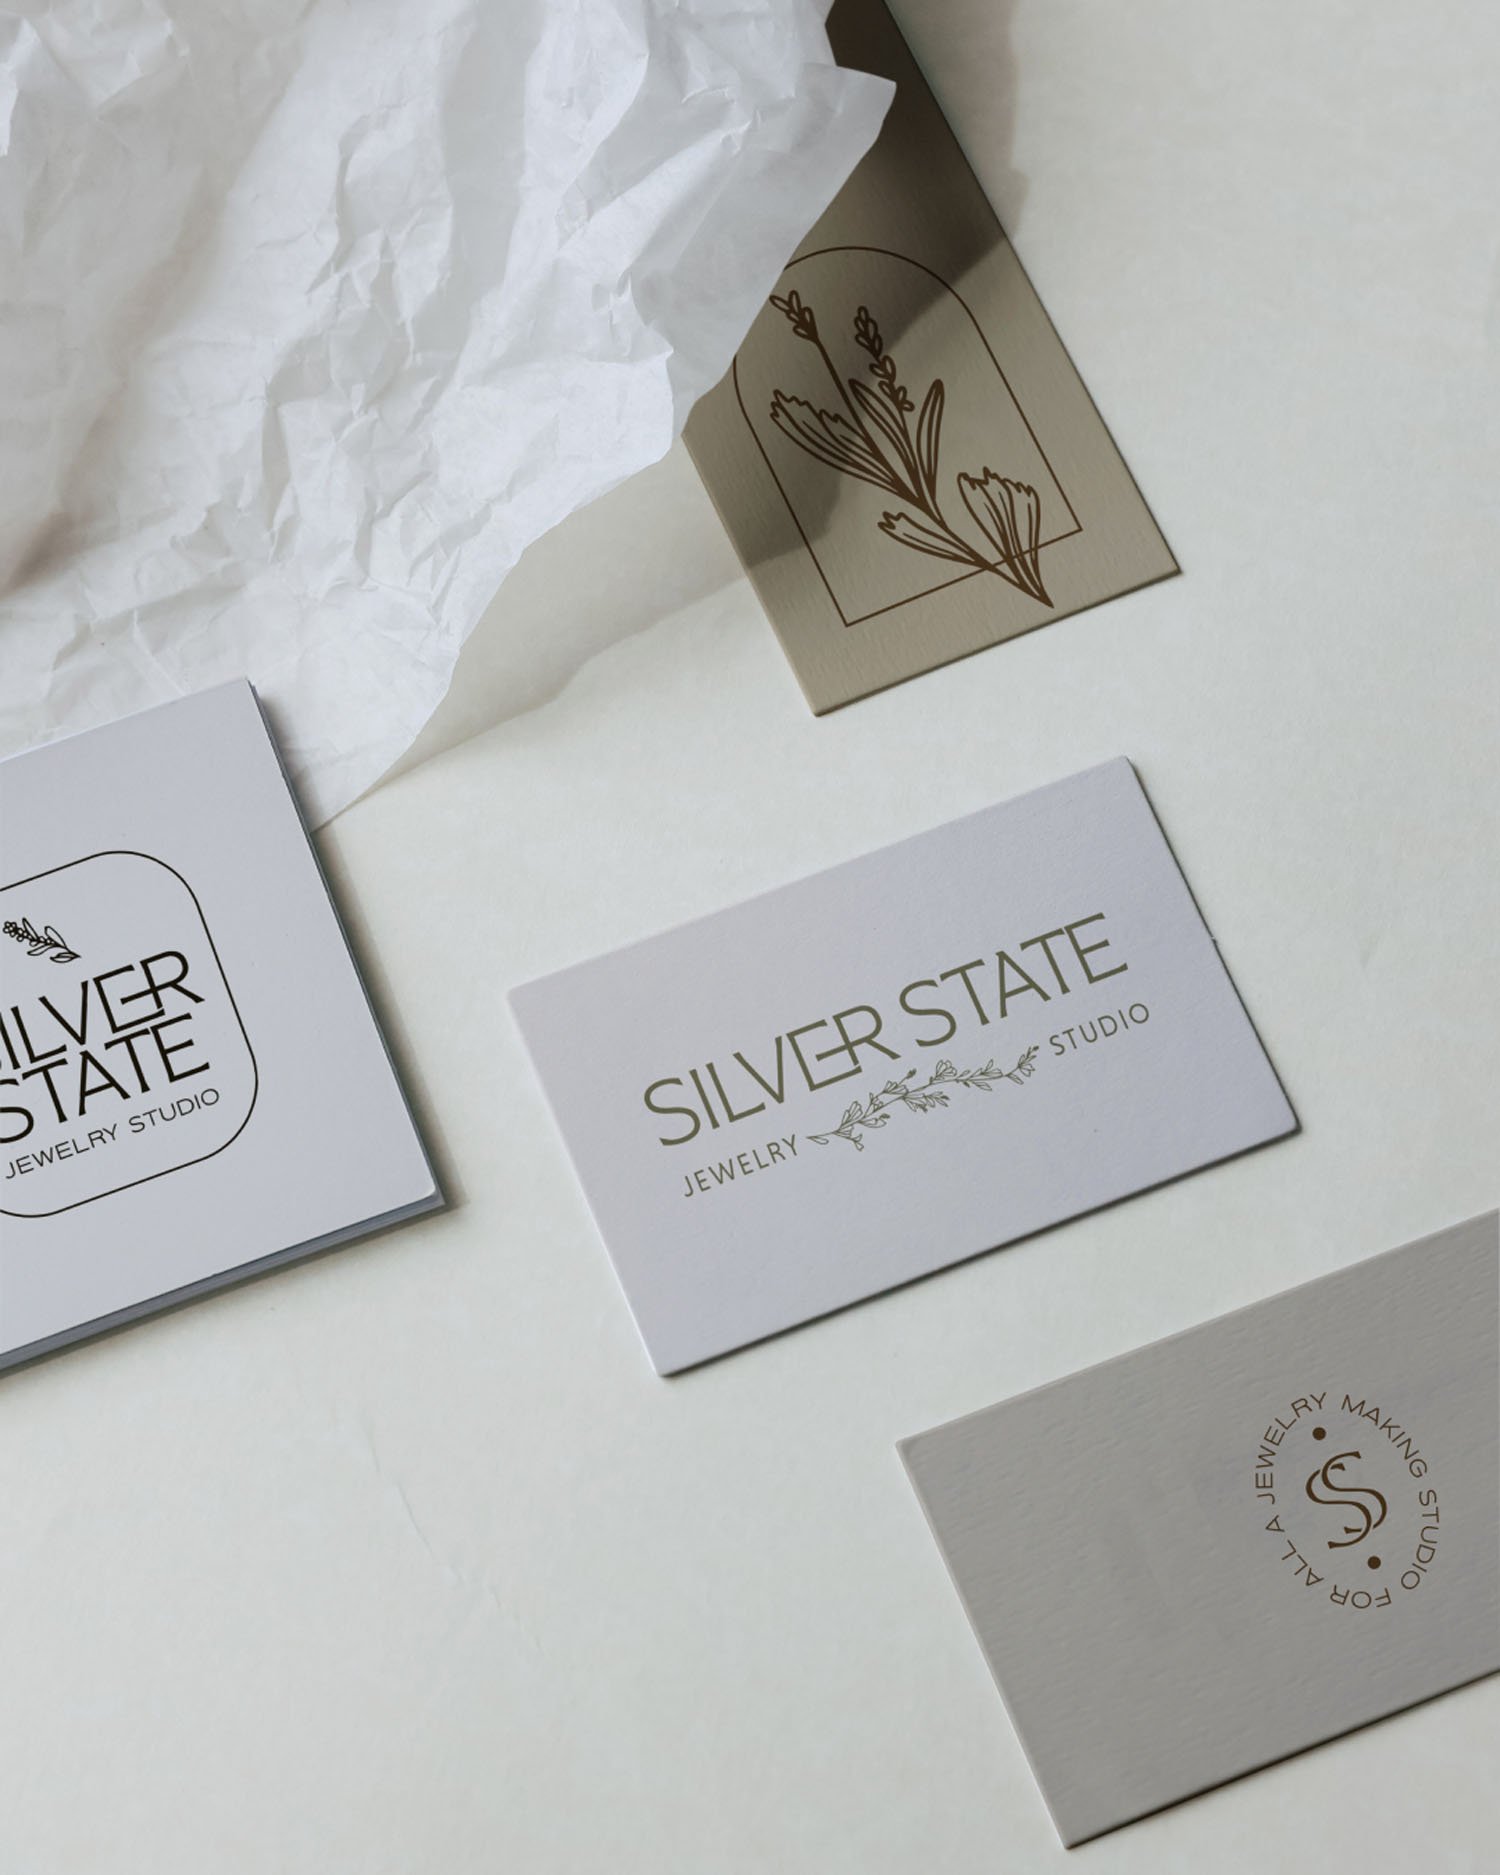 Silver State Jewelry Studio -Branding.jpg